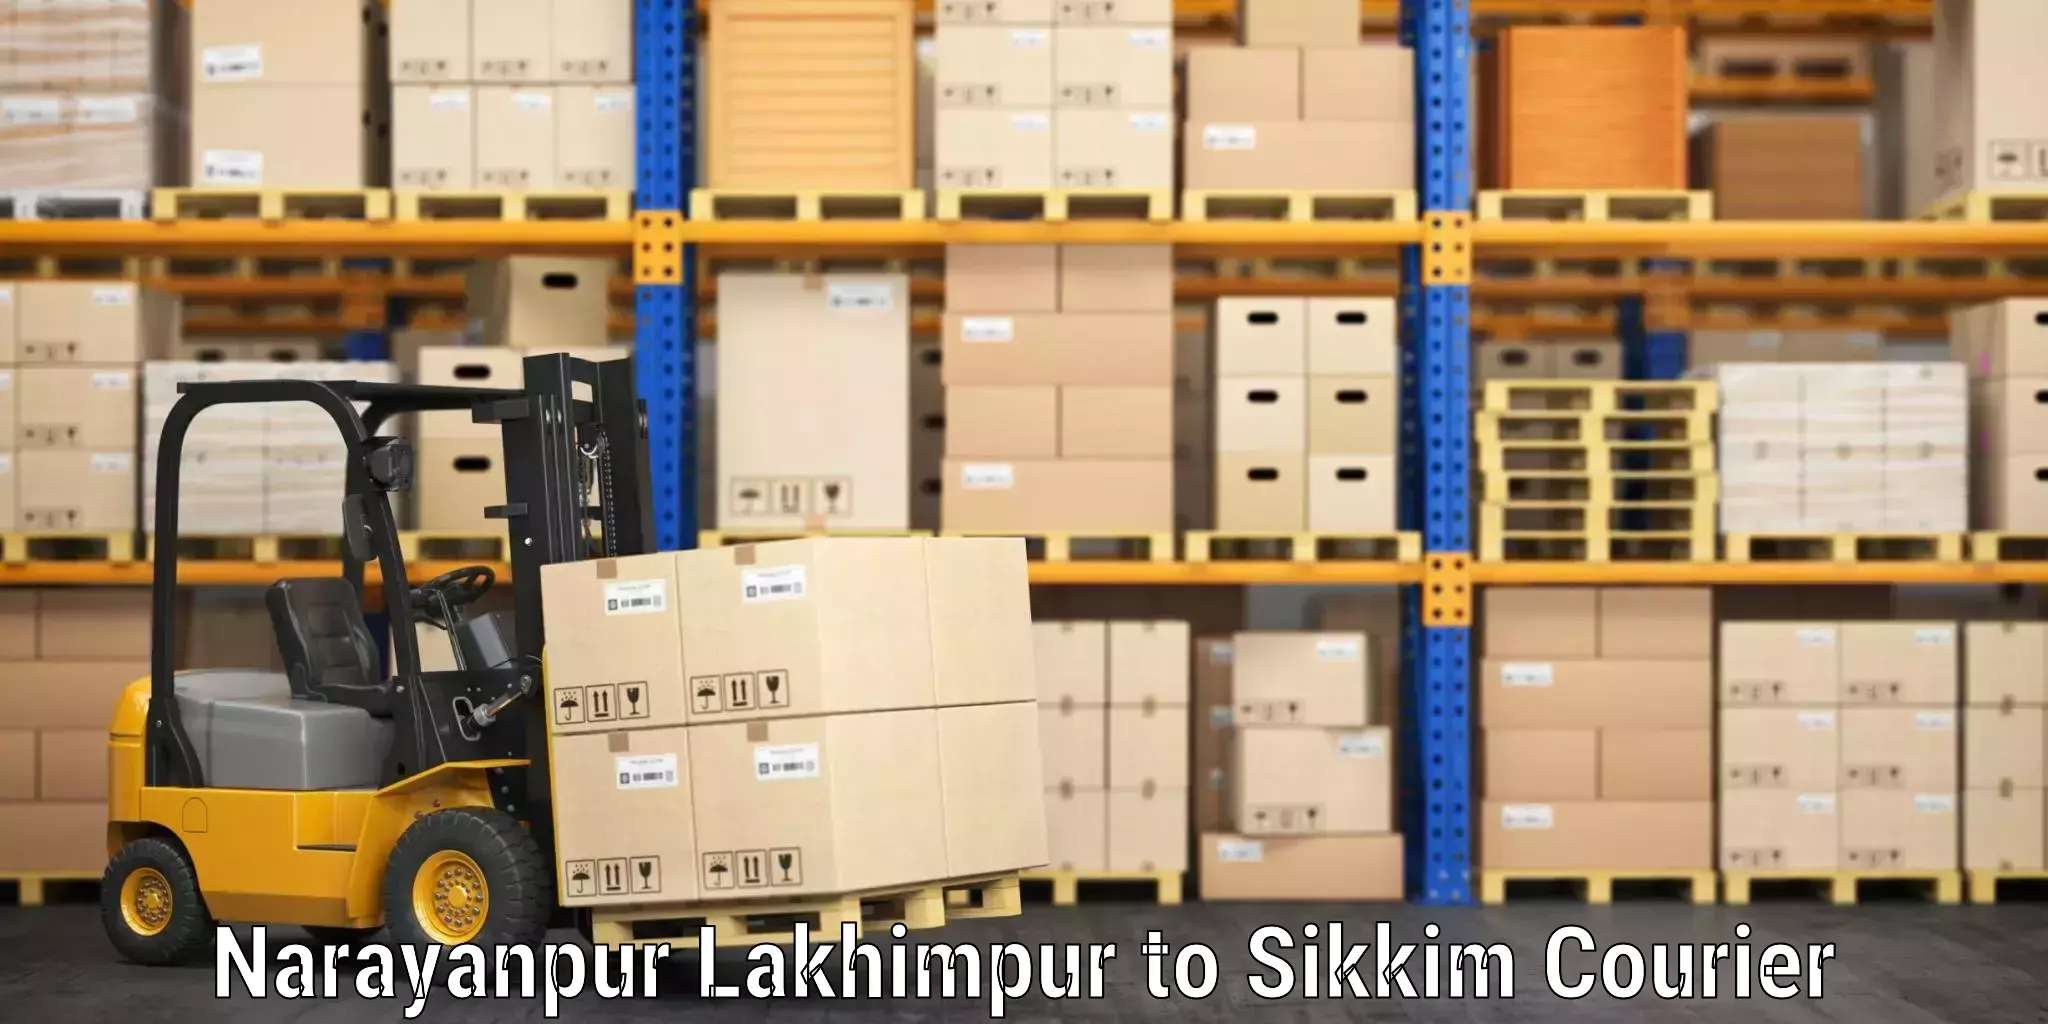 Luggage shipment processing Narayanpur Lakhimpur to Rangpo